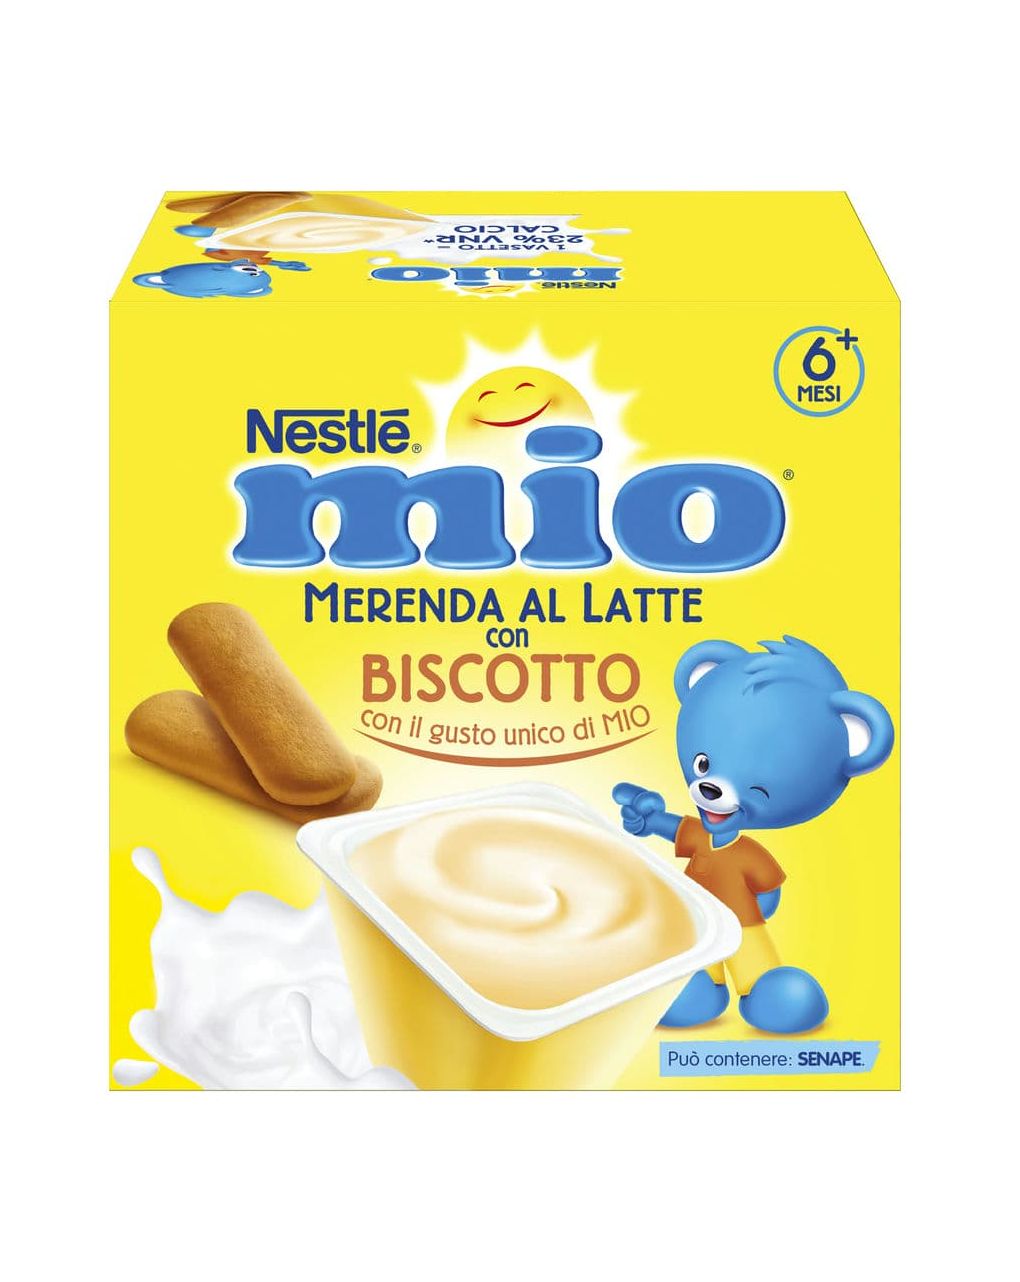 Mio merenda al latte biscotto da 6 mesi - 4 vasetti da 100g - nestlé - Nestlé